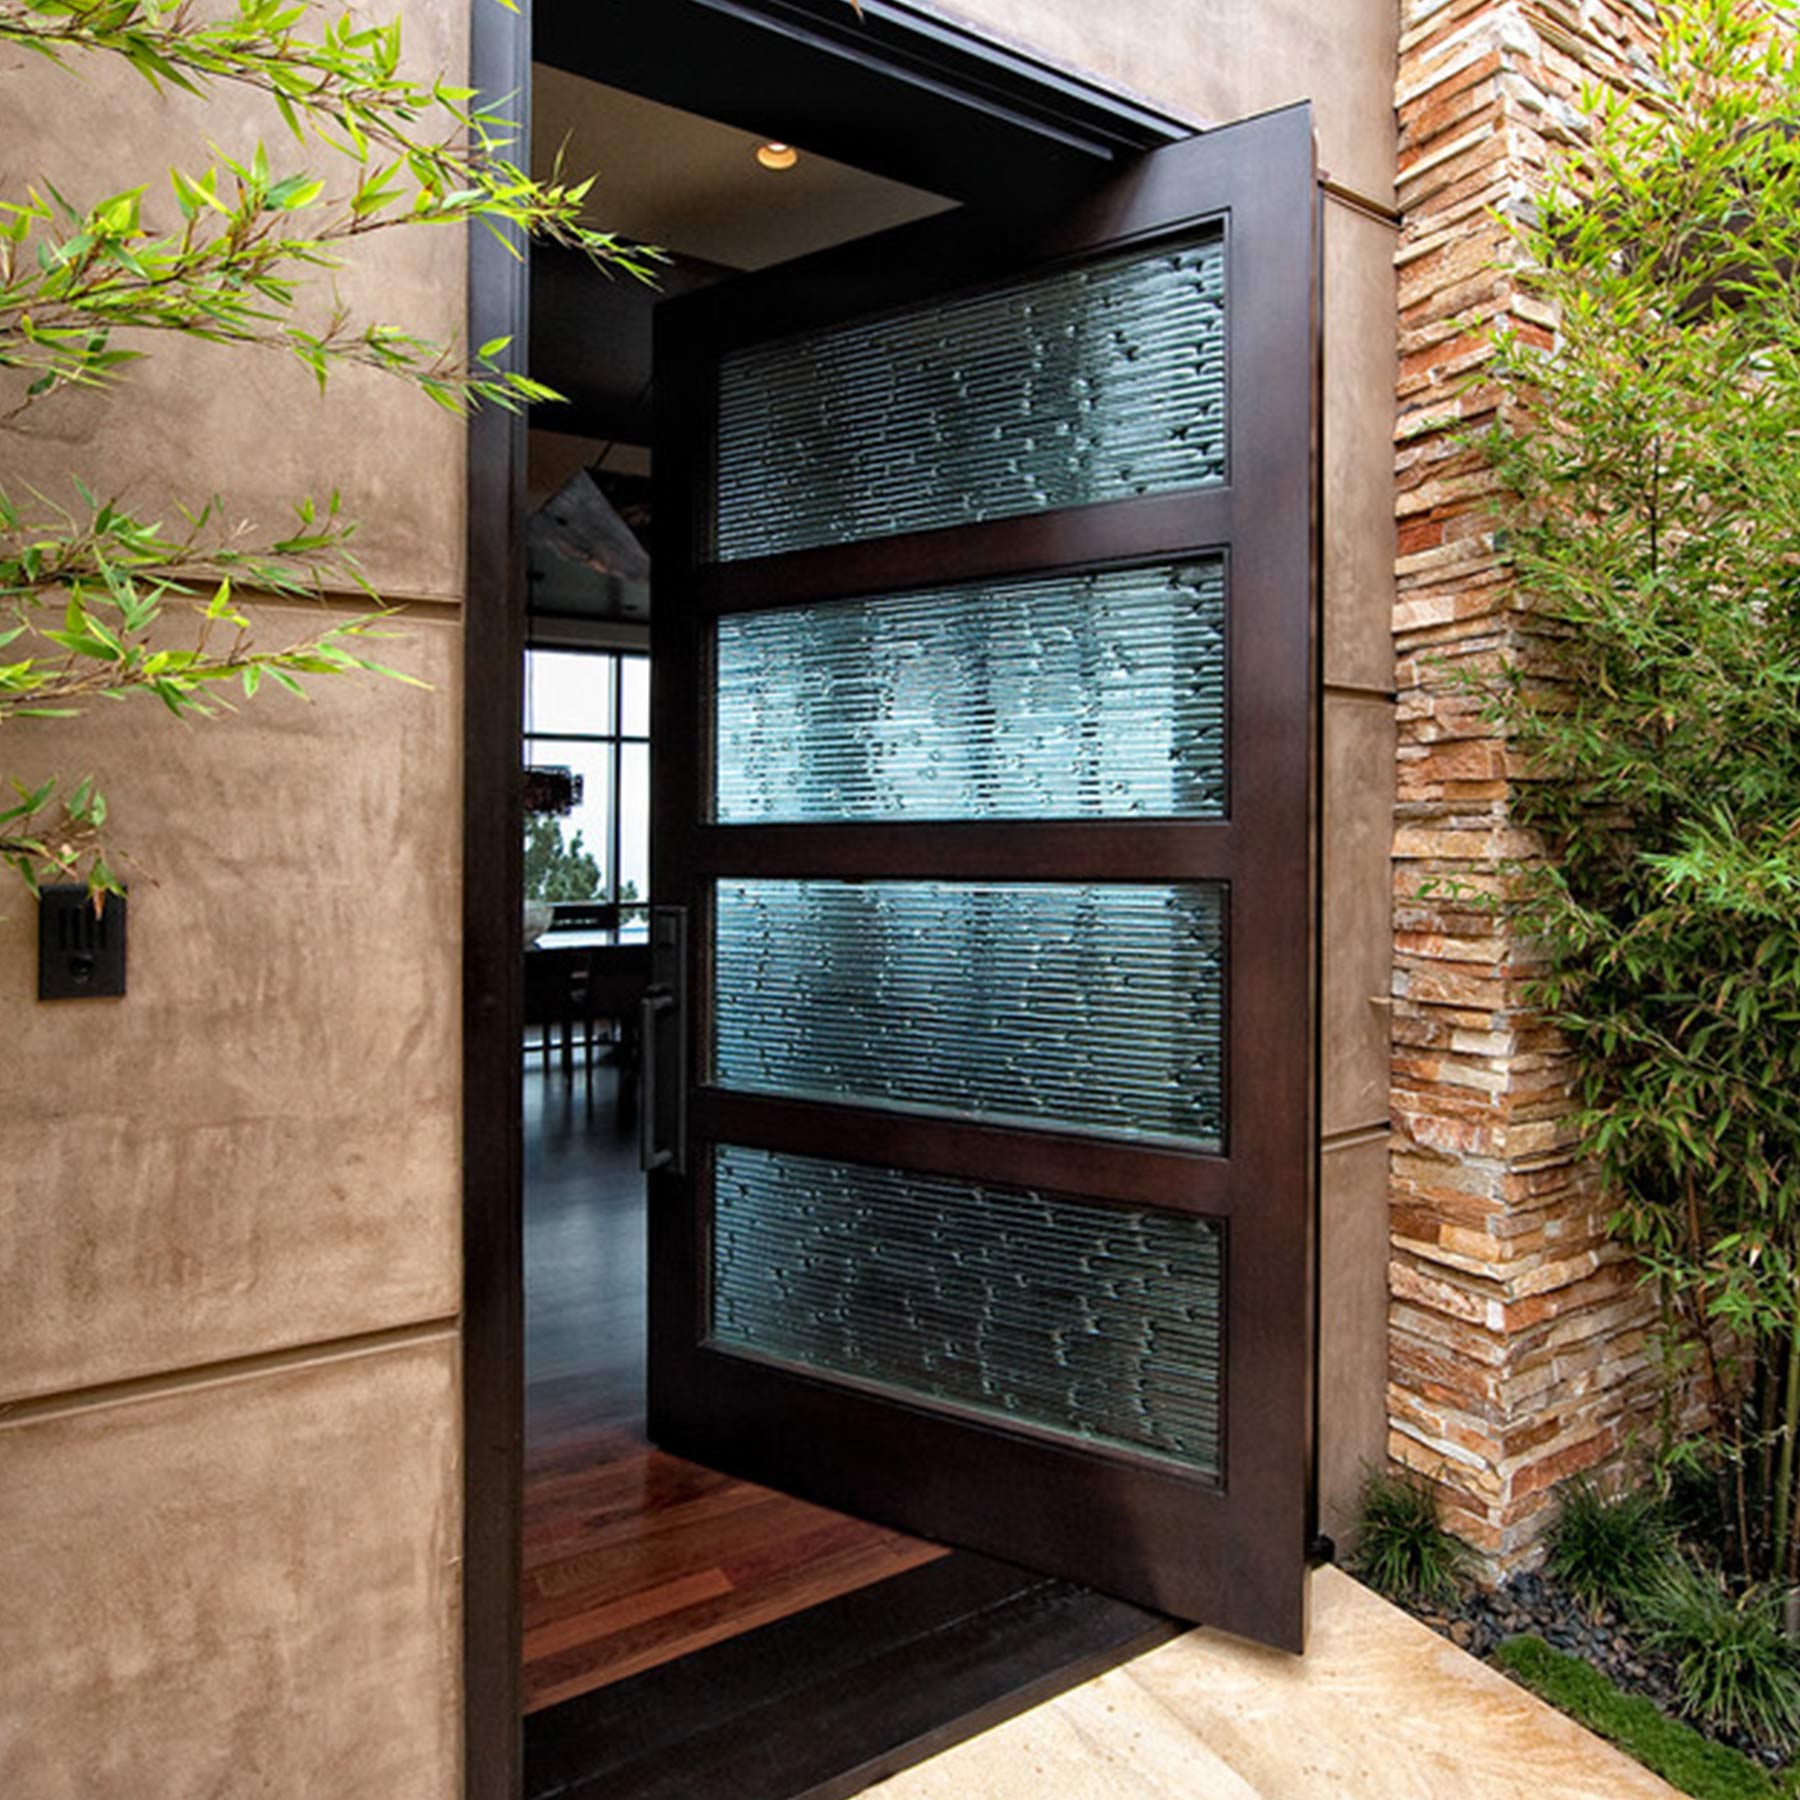 gloryirondoors thermal break thick frame high quality modern steel pivot front door